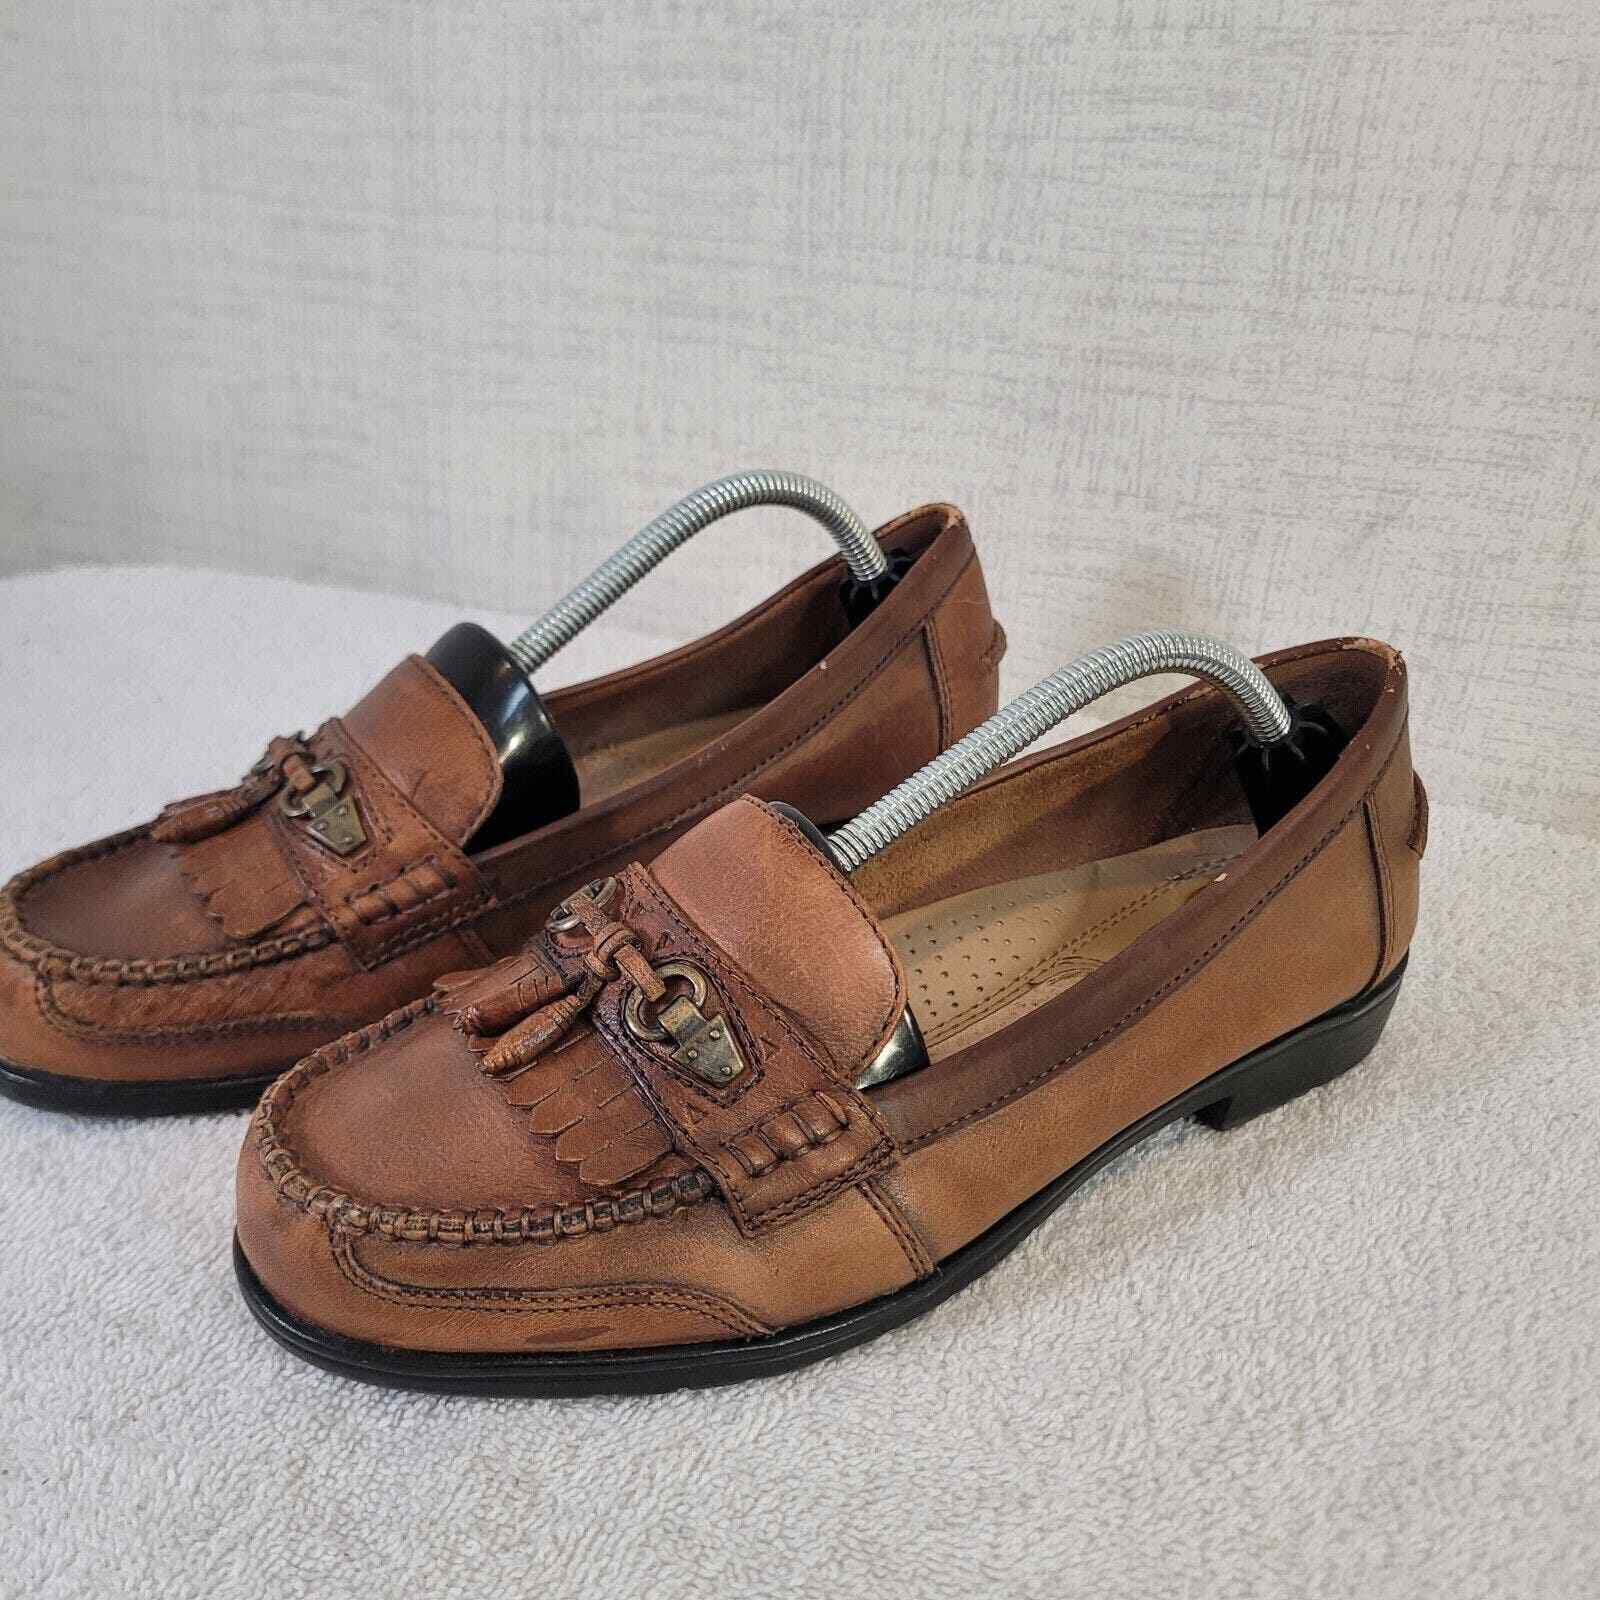 Earth Spirit Women's Comfort Shoes Sz 8 Paula Tassel Loafers Brown Leather